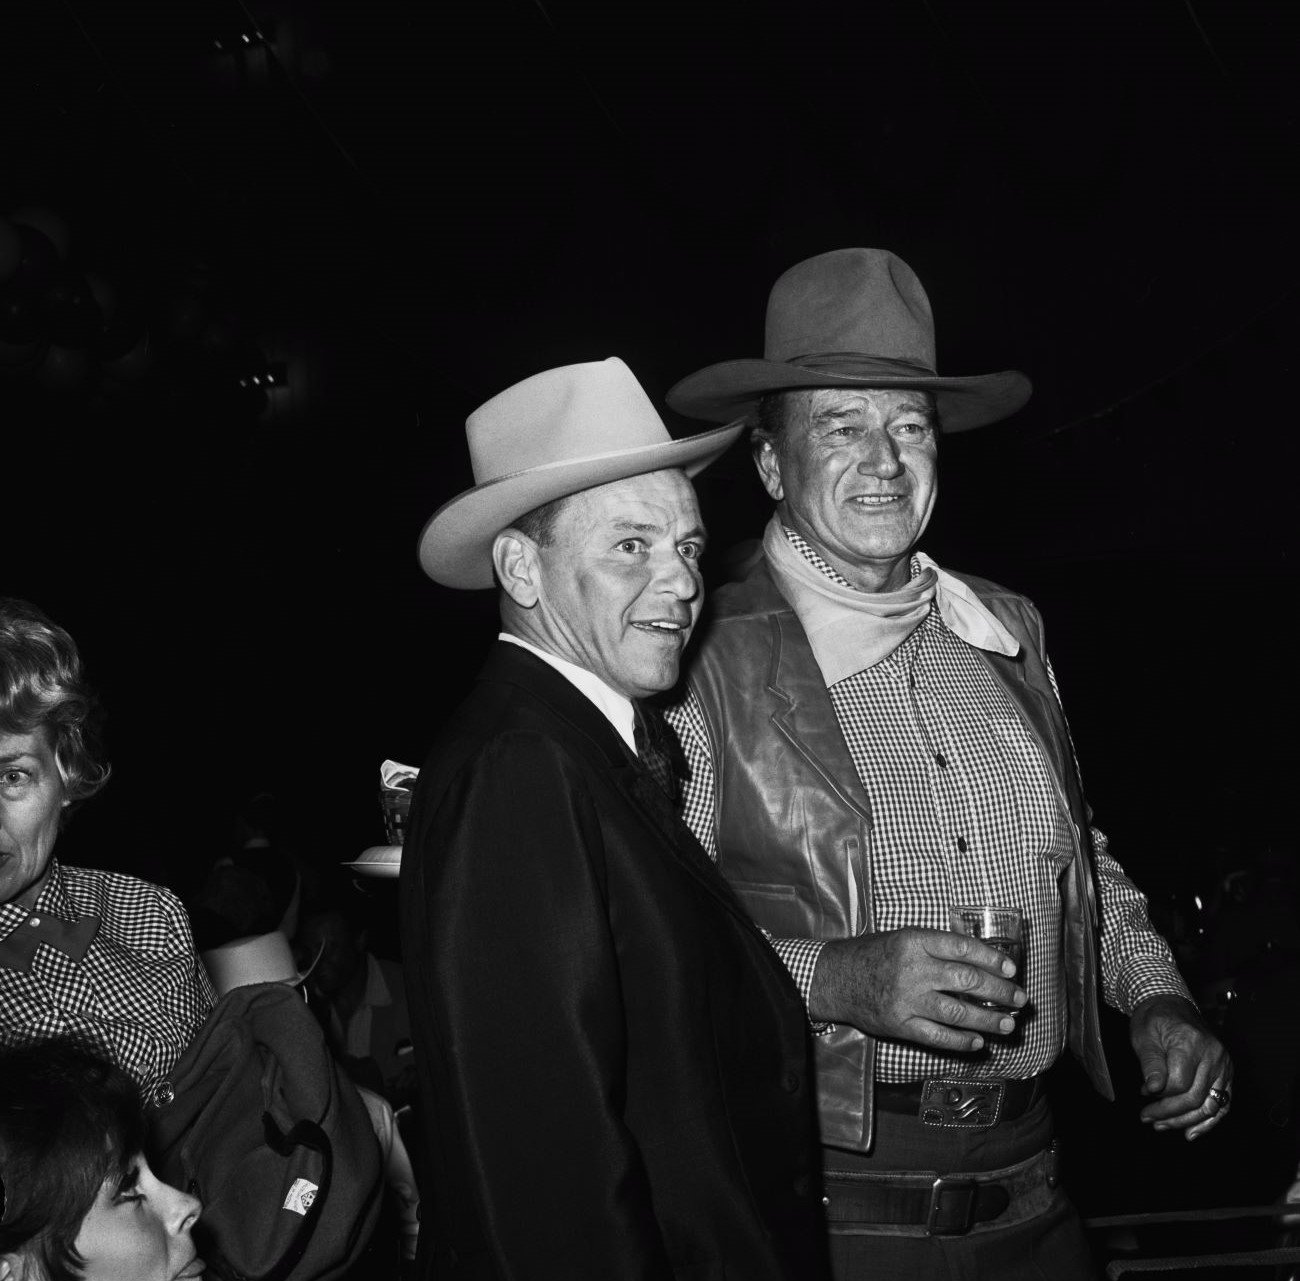 Frank Sinatra and John Wayne Nearly Came to Blows Over Sinatra 'Crony' JFK and Communism